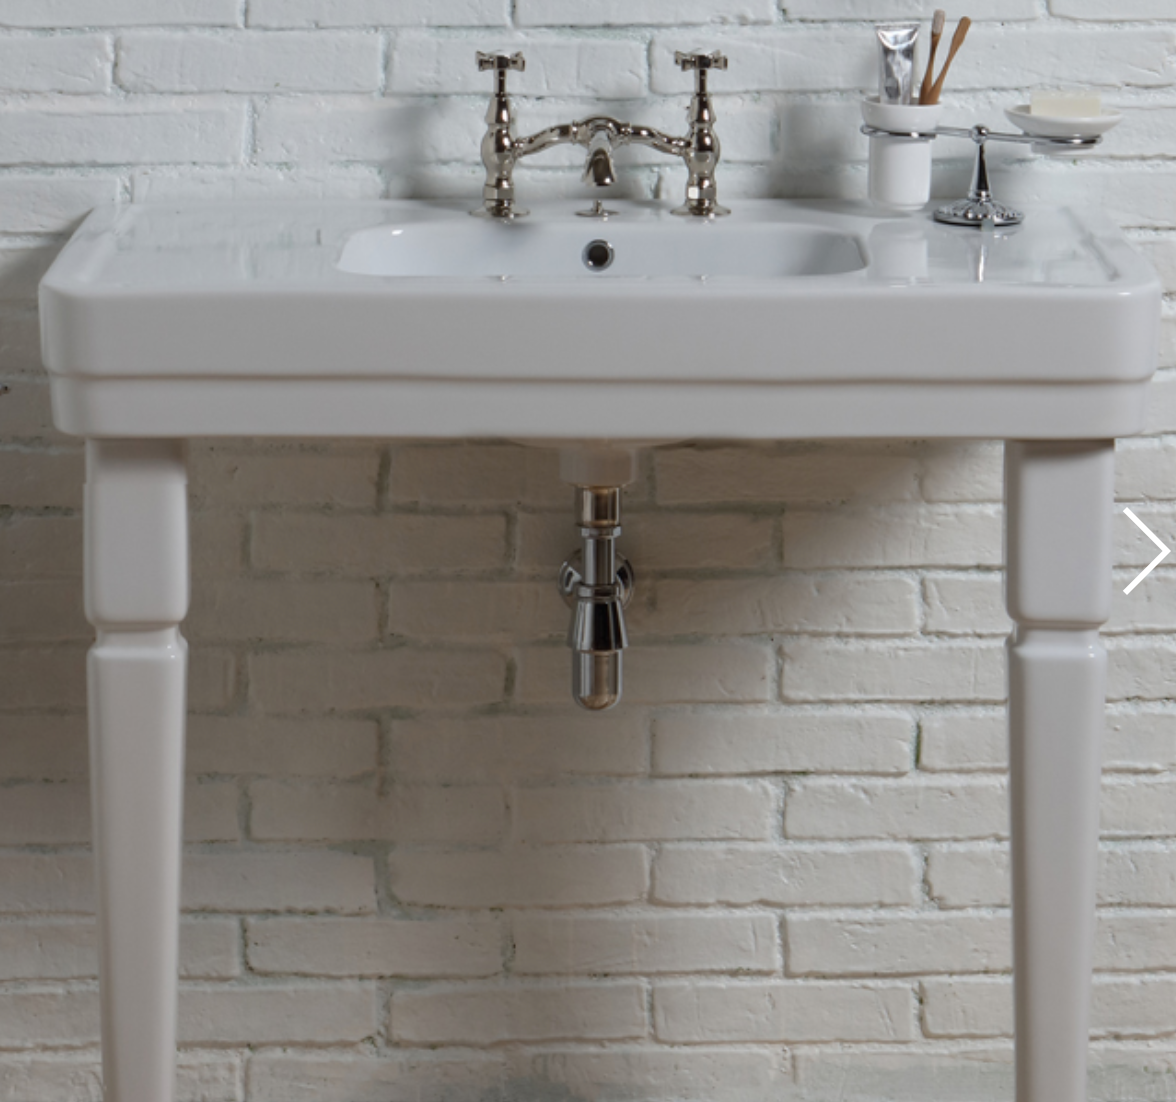 Ceramic washbasin with Classic style legs